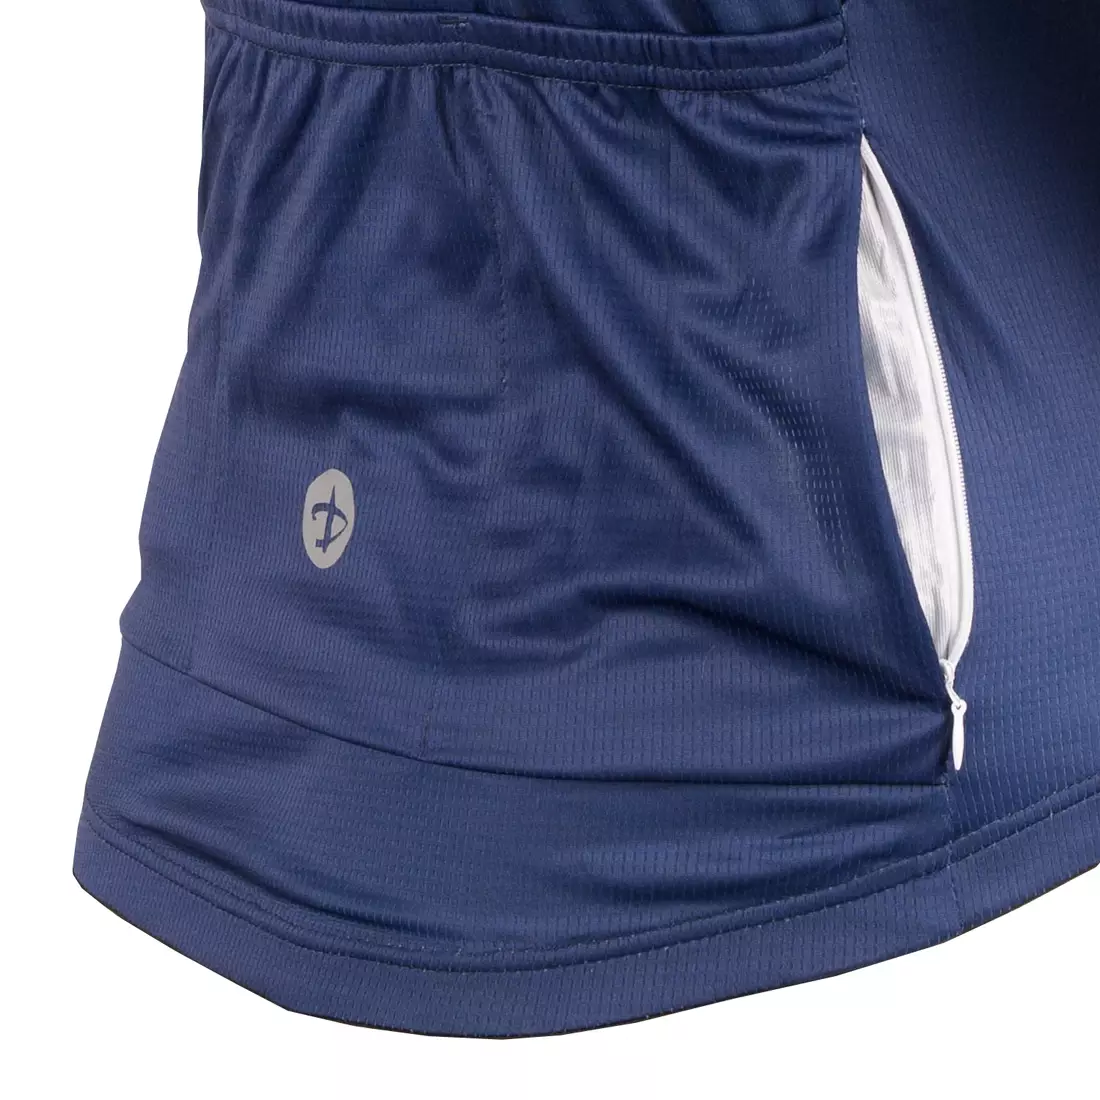 [Set] DEKO STYLE-0421 pánský cyklistický dres s krátkým rukávem, námořnická modrá + DEKO POCKET pánské cyklistické kraťasy, černá